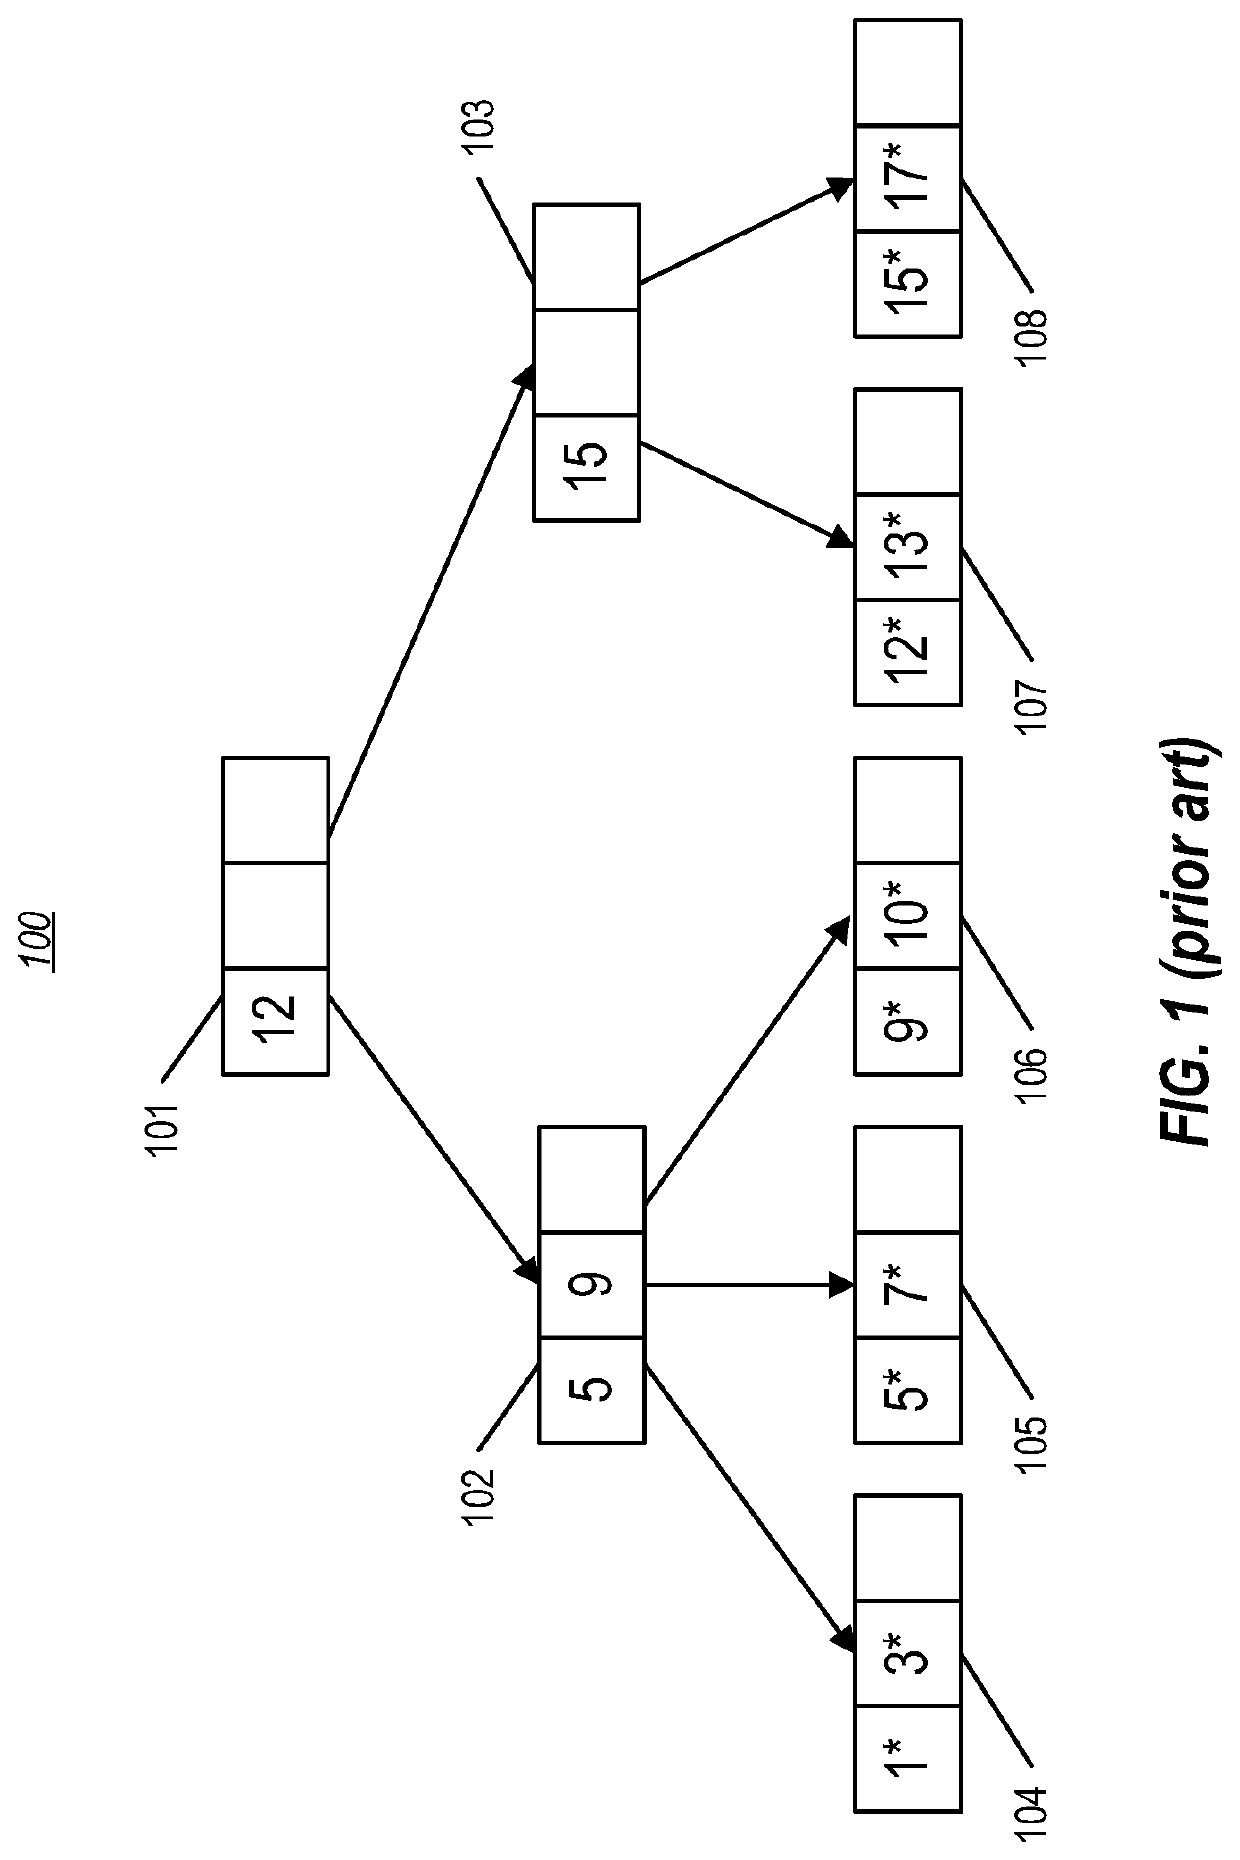 Managing snapshotting of a dataset using an ordered set of b+ trees